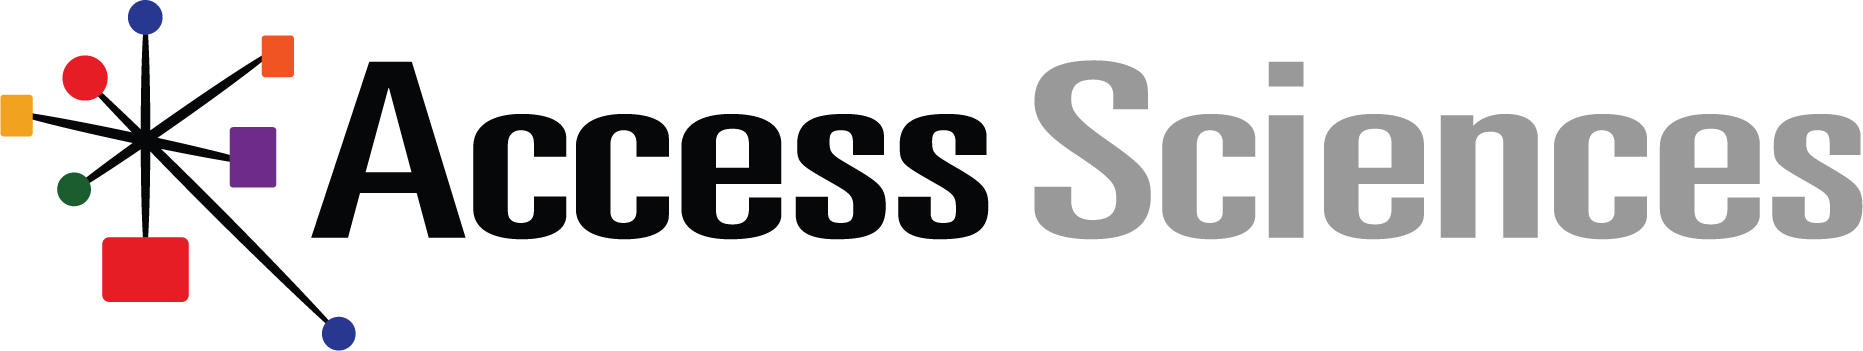 Access Sciences Corporation logo